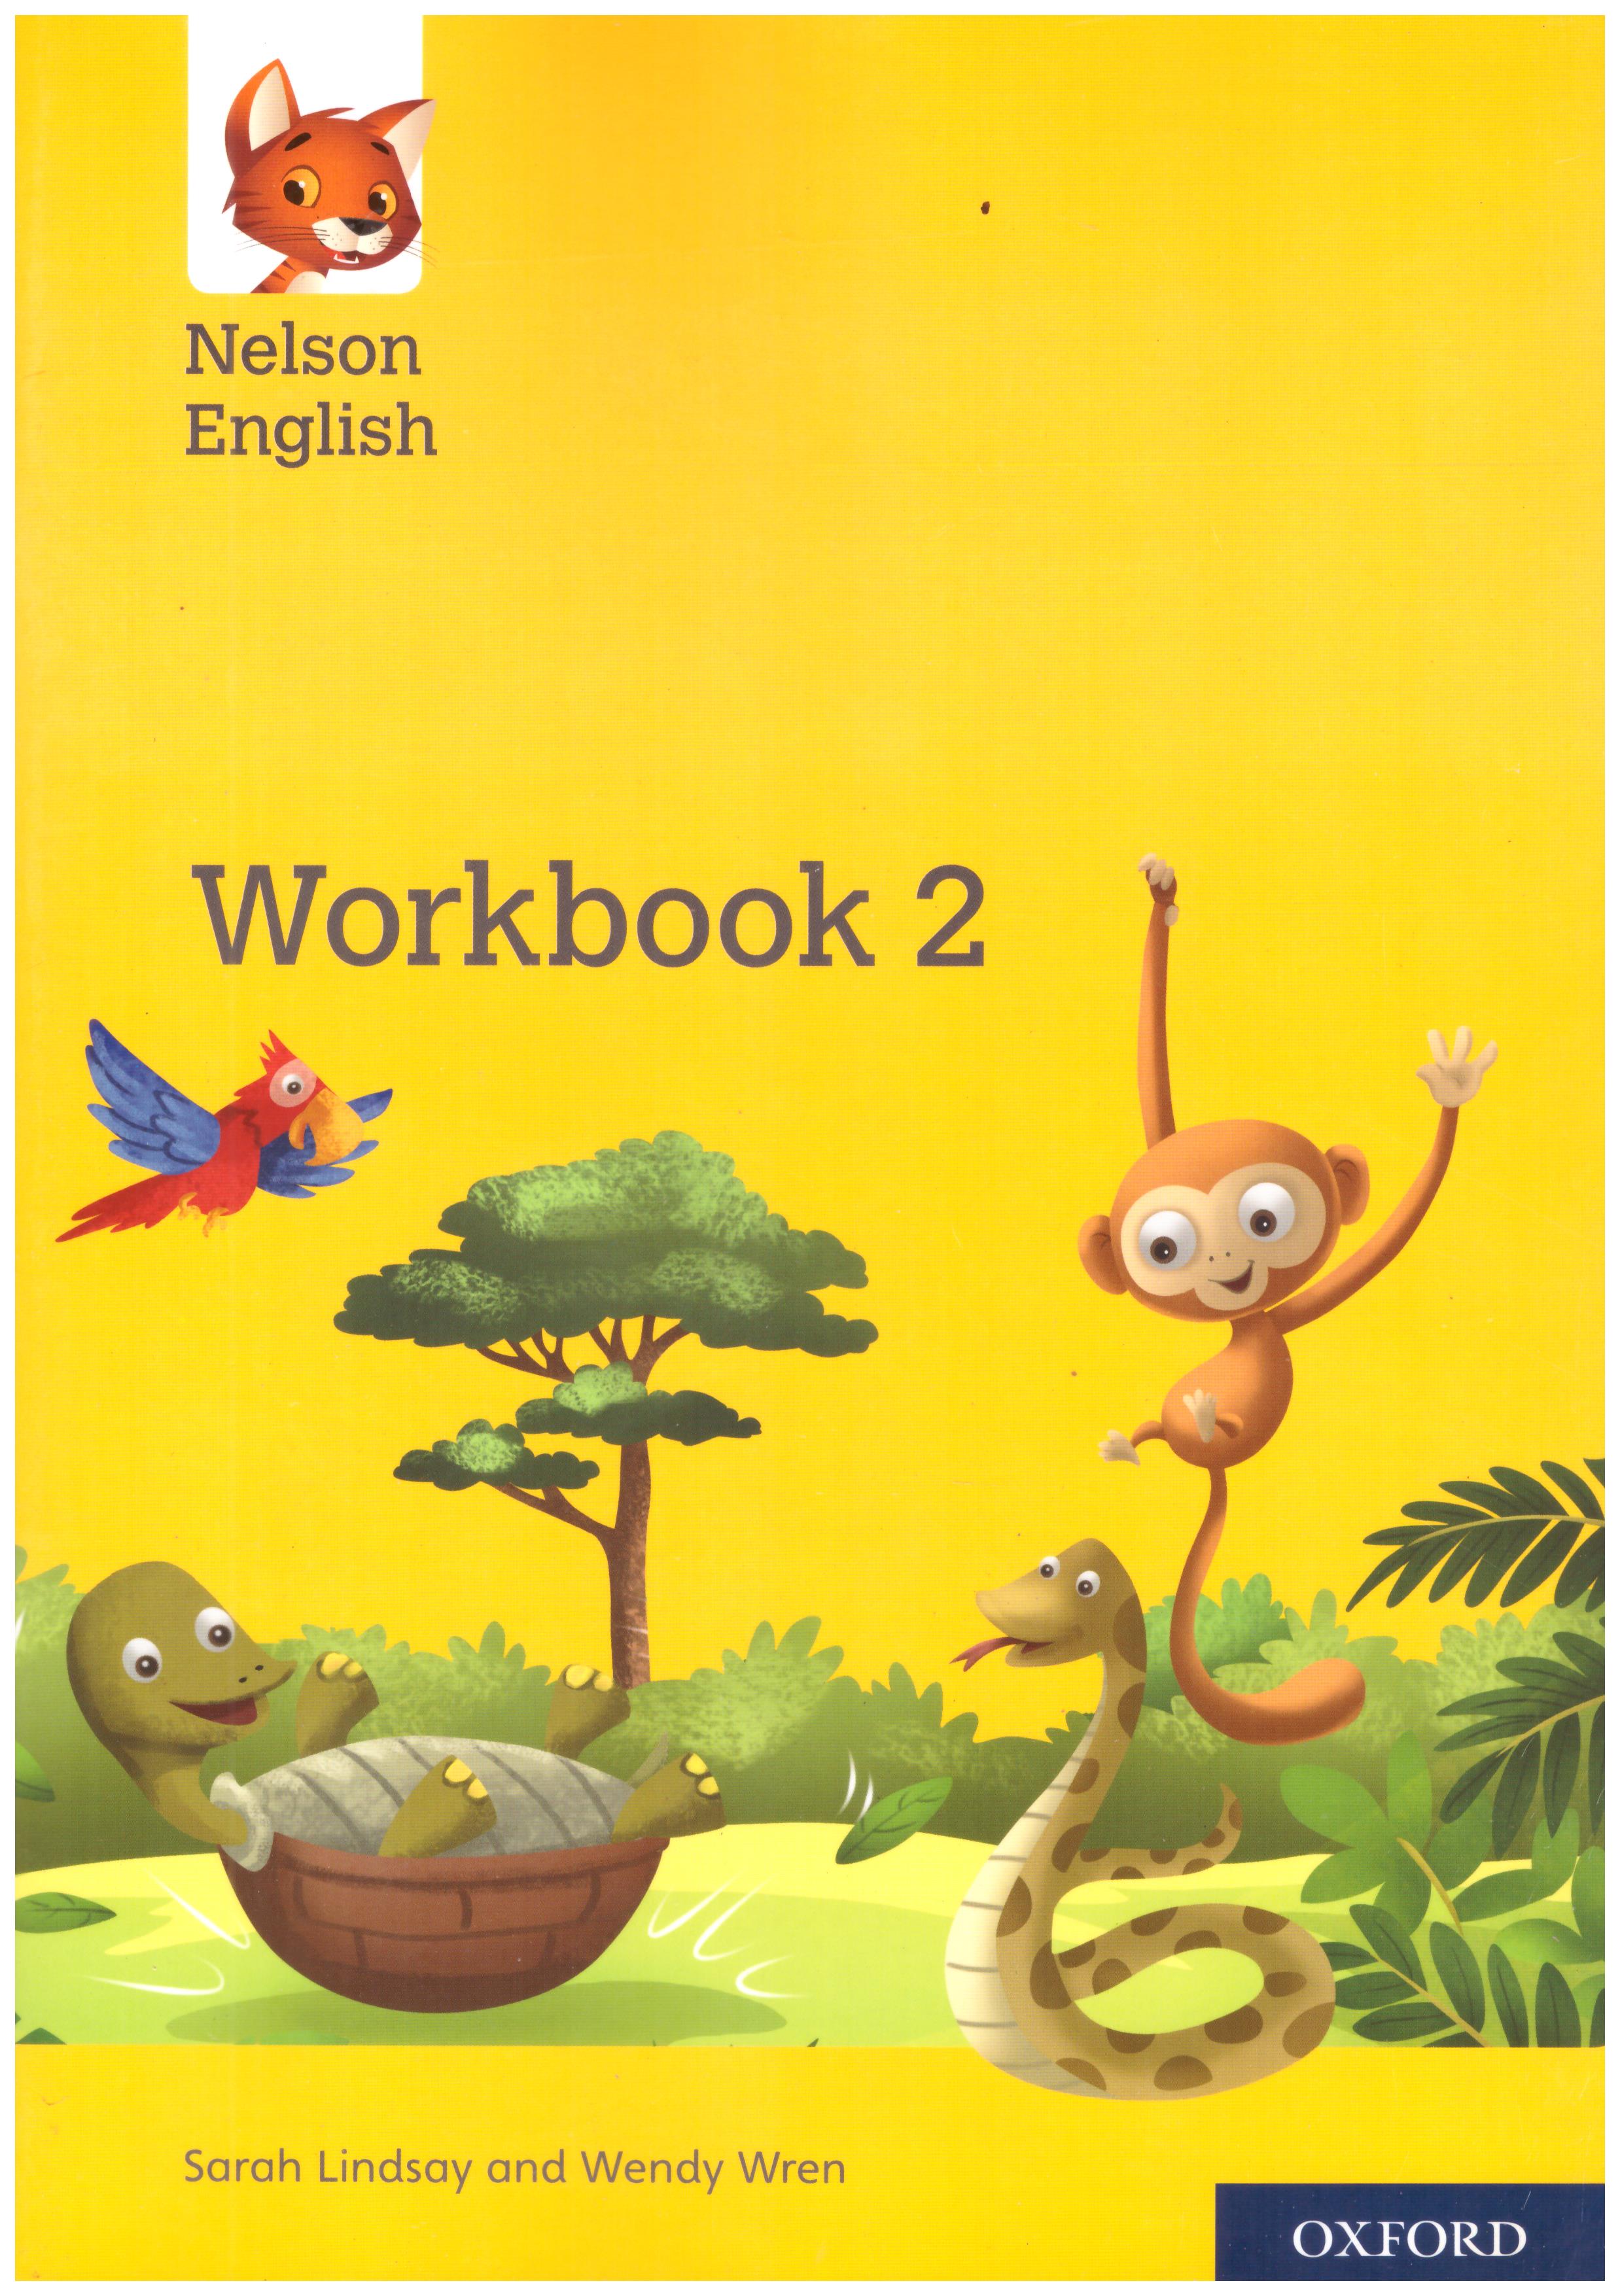 Nelson English Workbook 2